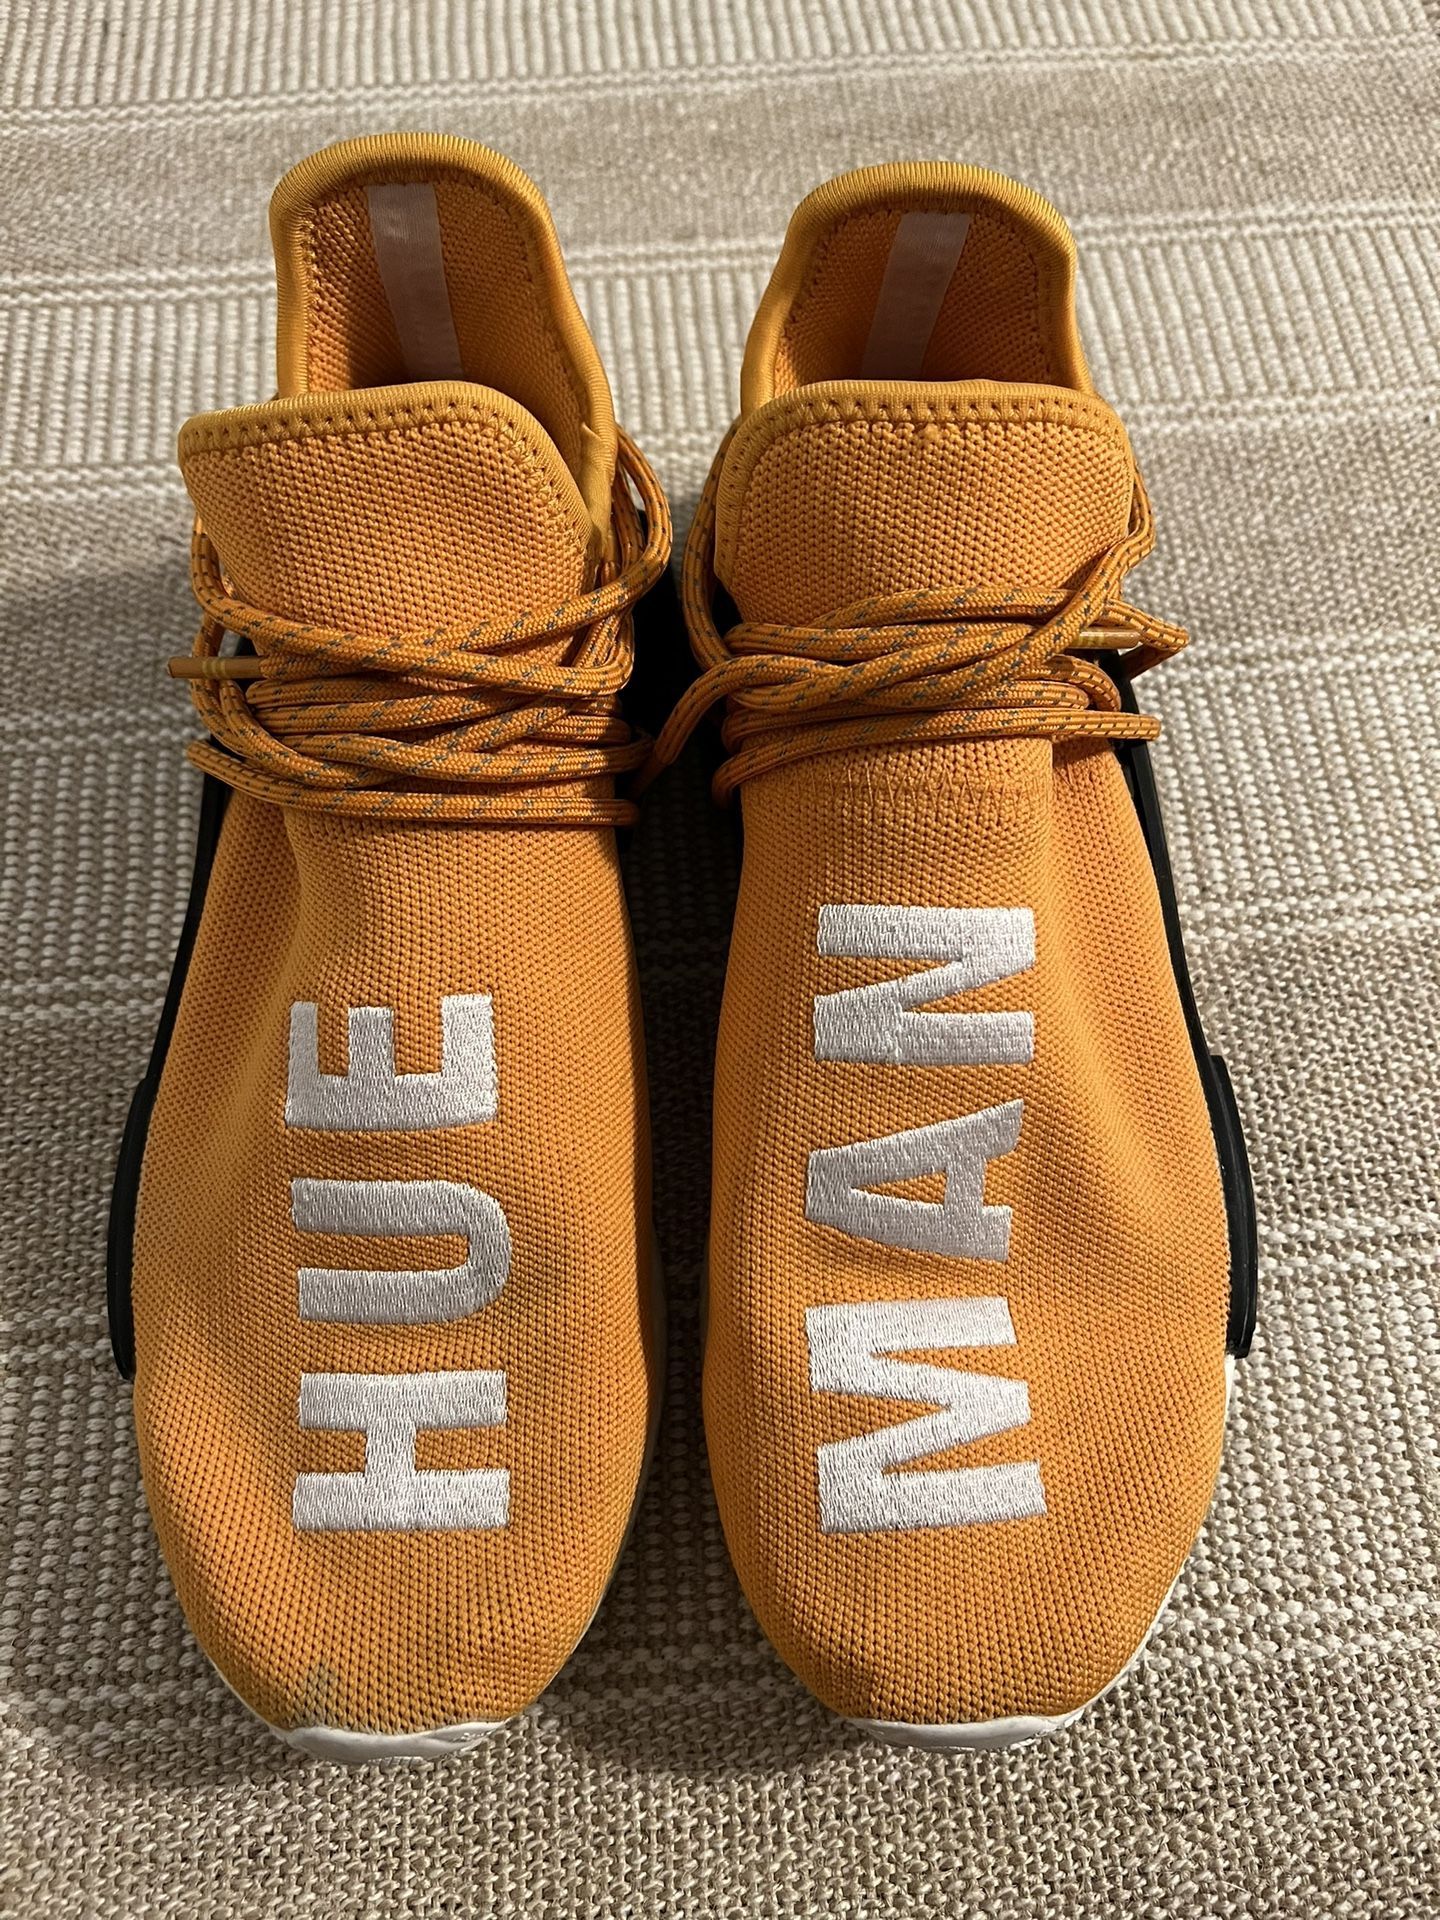 Adidas NMD Pharrell HU Hue Man Tangerine (2016) for Sale in New York, NY - OfferUp